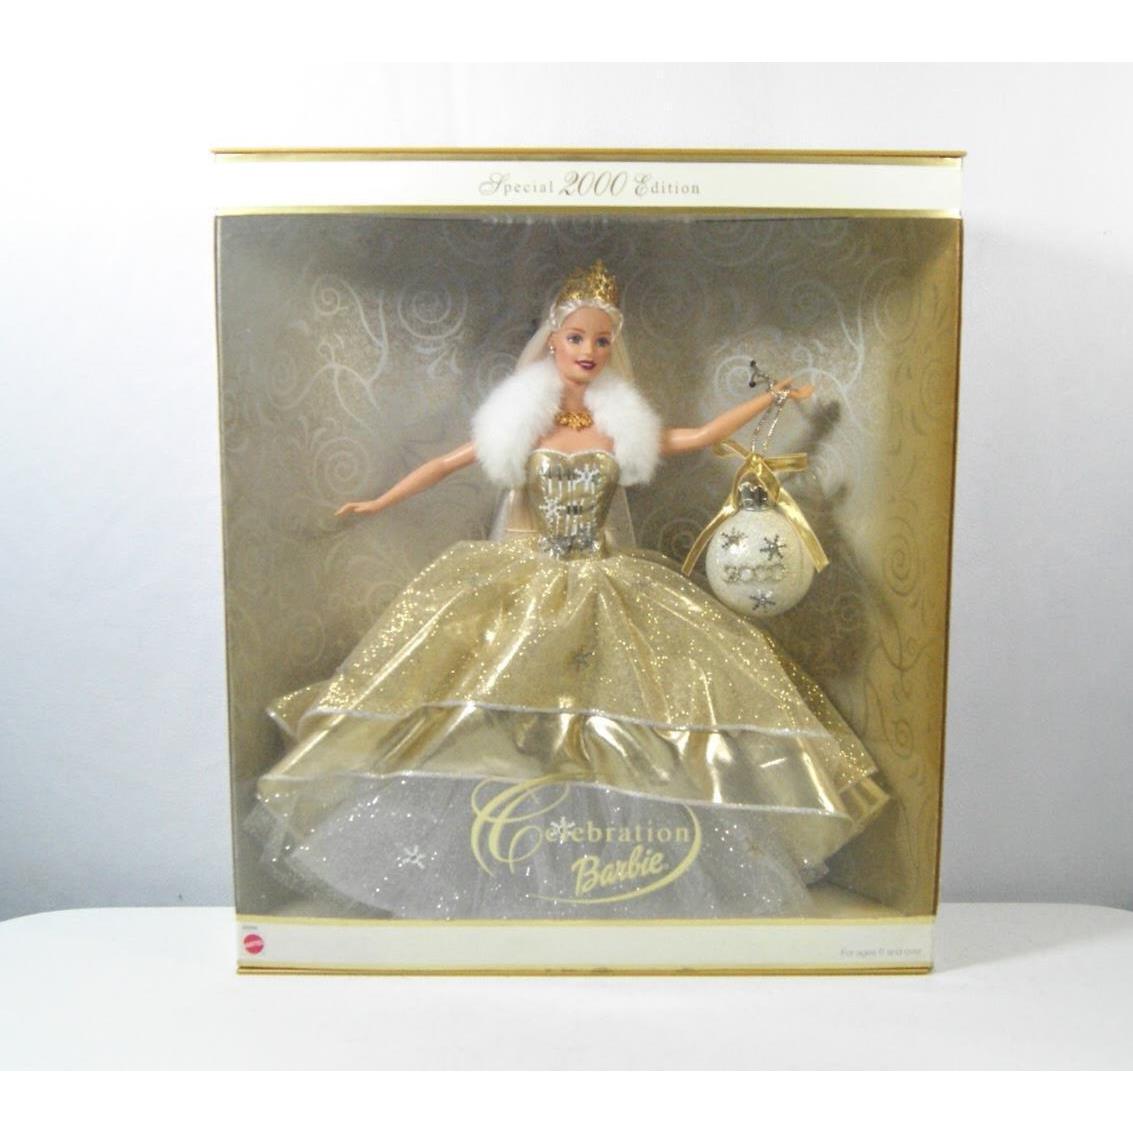 2000 Mattel Holiday Celebration Special Edition Barbie Doll Blonde 28269